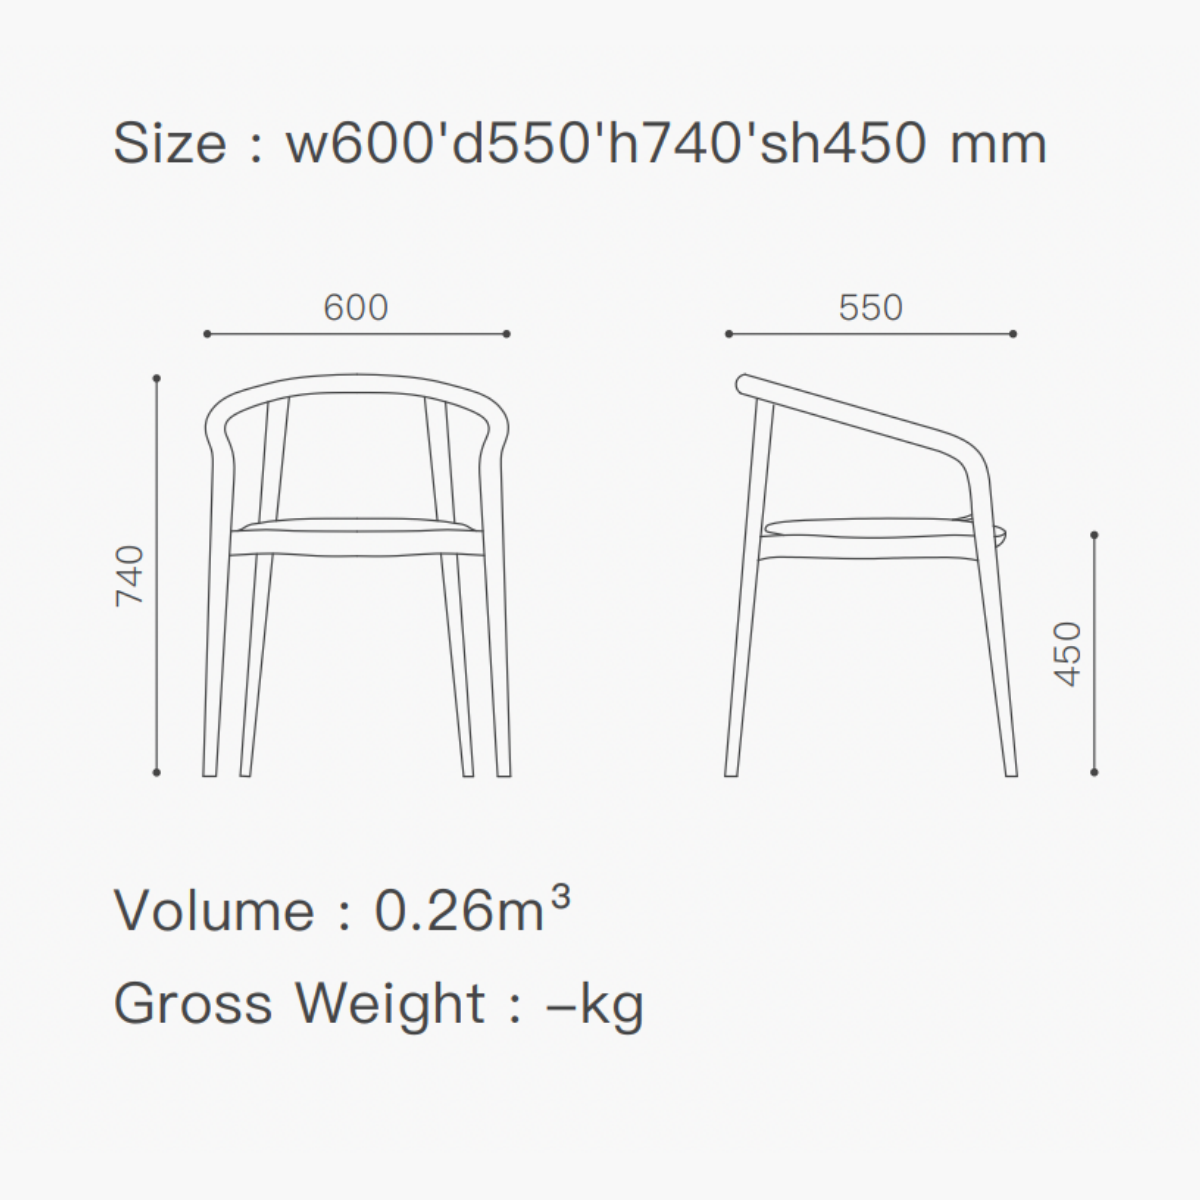 Simple Rattan Chair / シンプルラタンチェア